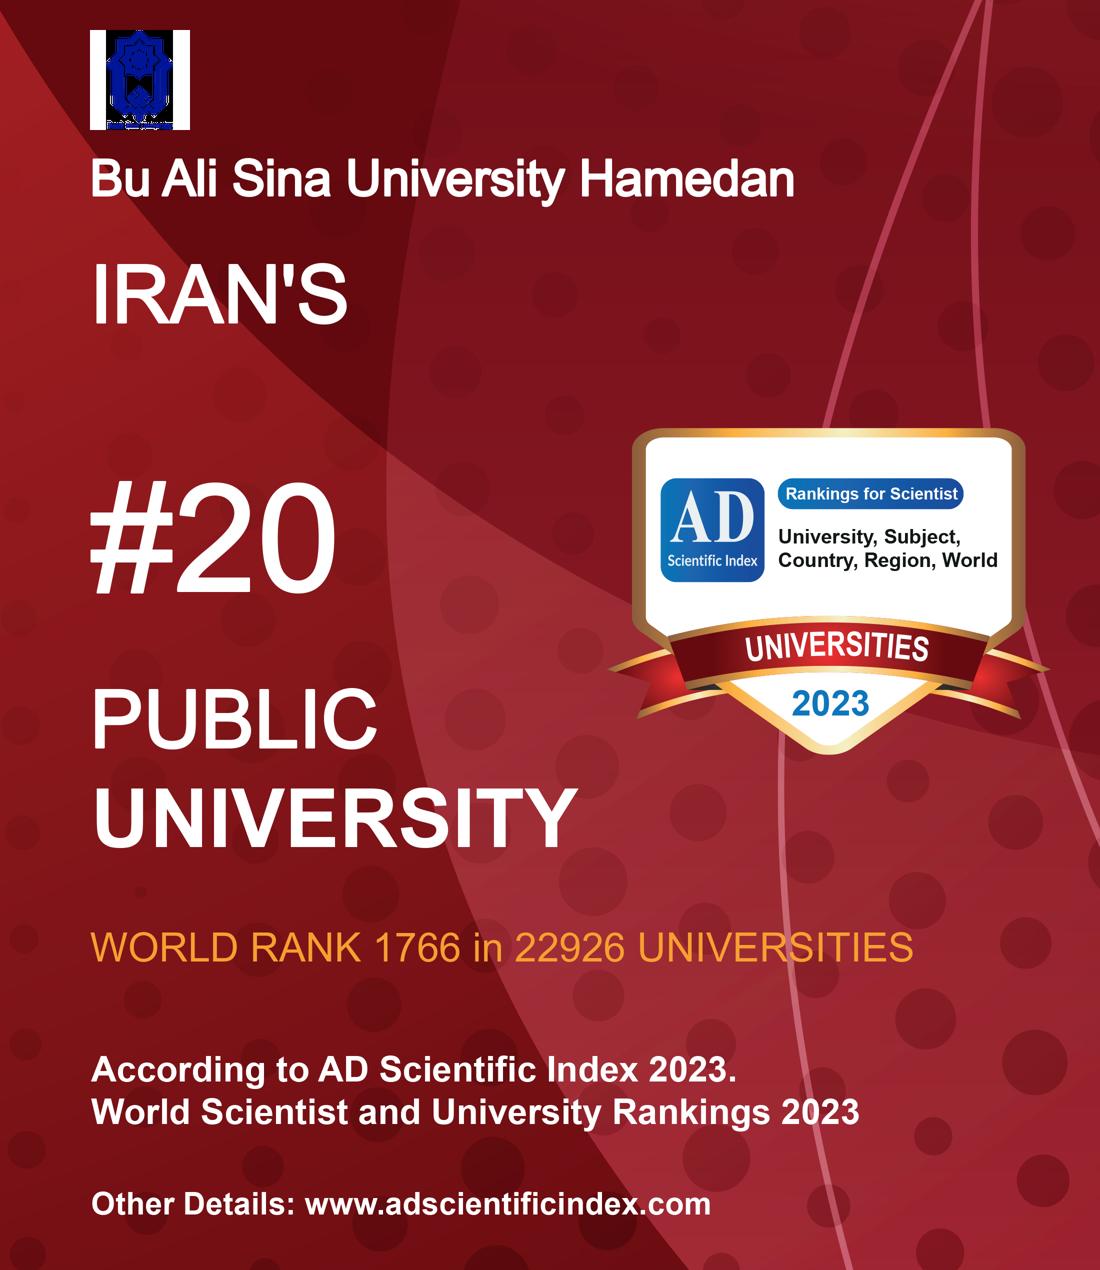 Bu Ali Sina University Hamedan